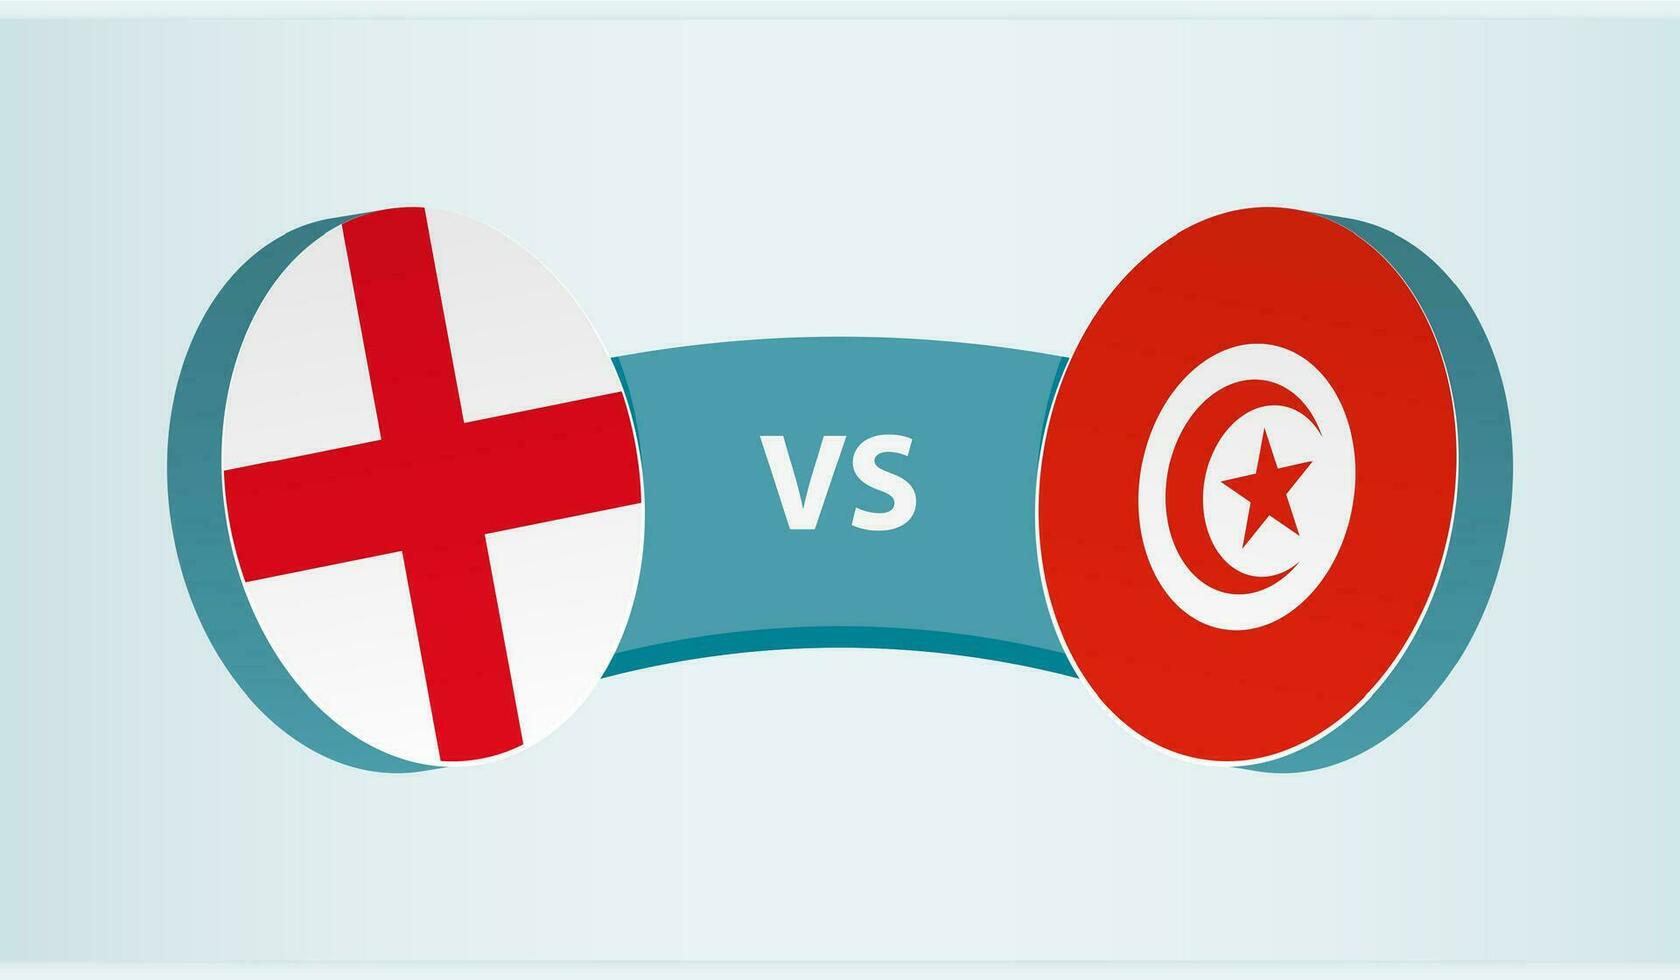 England versus Tunisia, team sports competition concept. vector